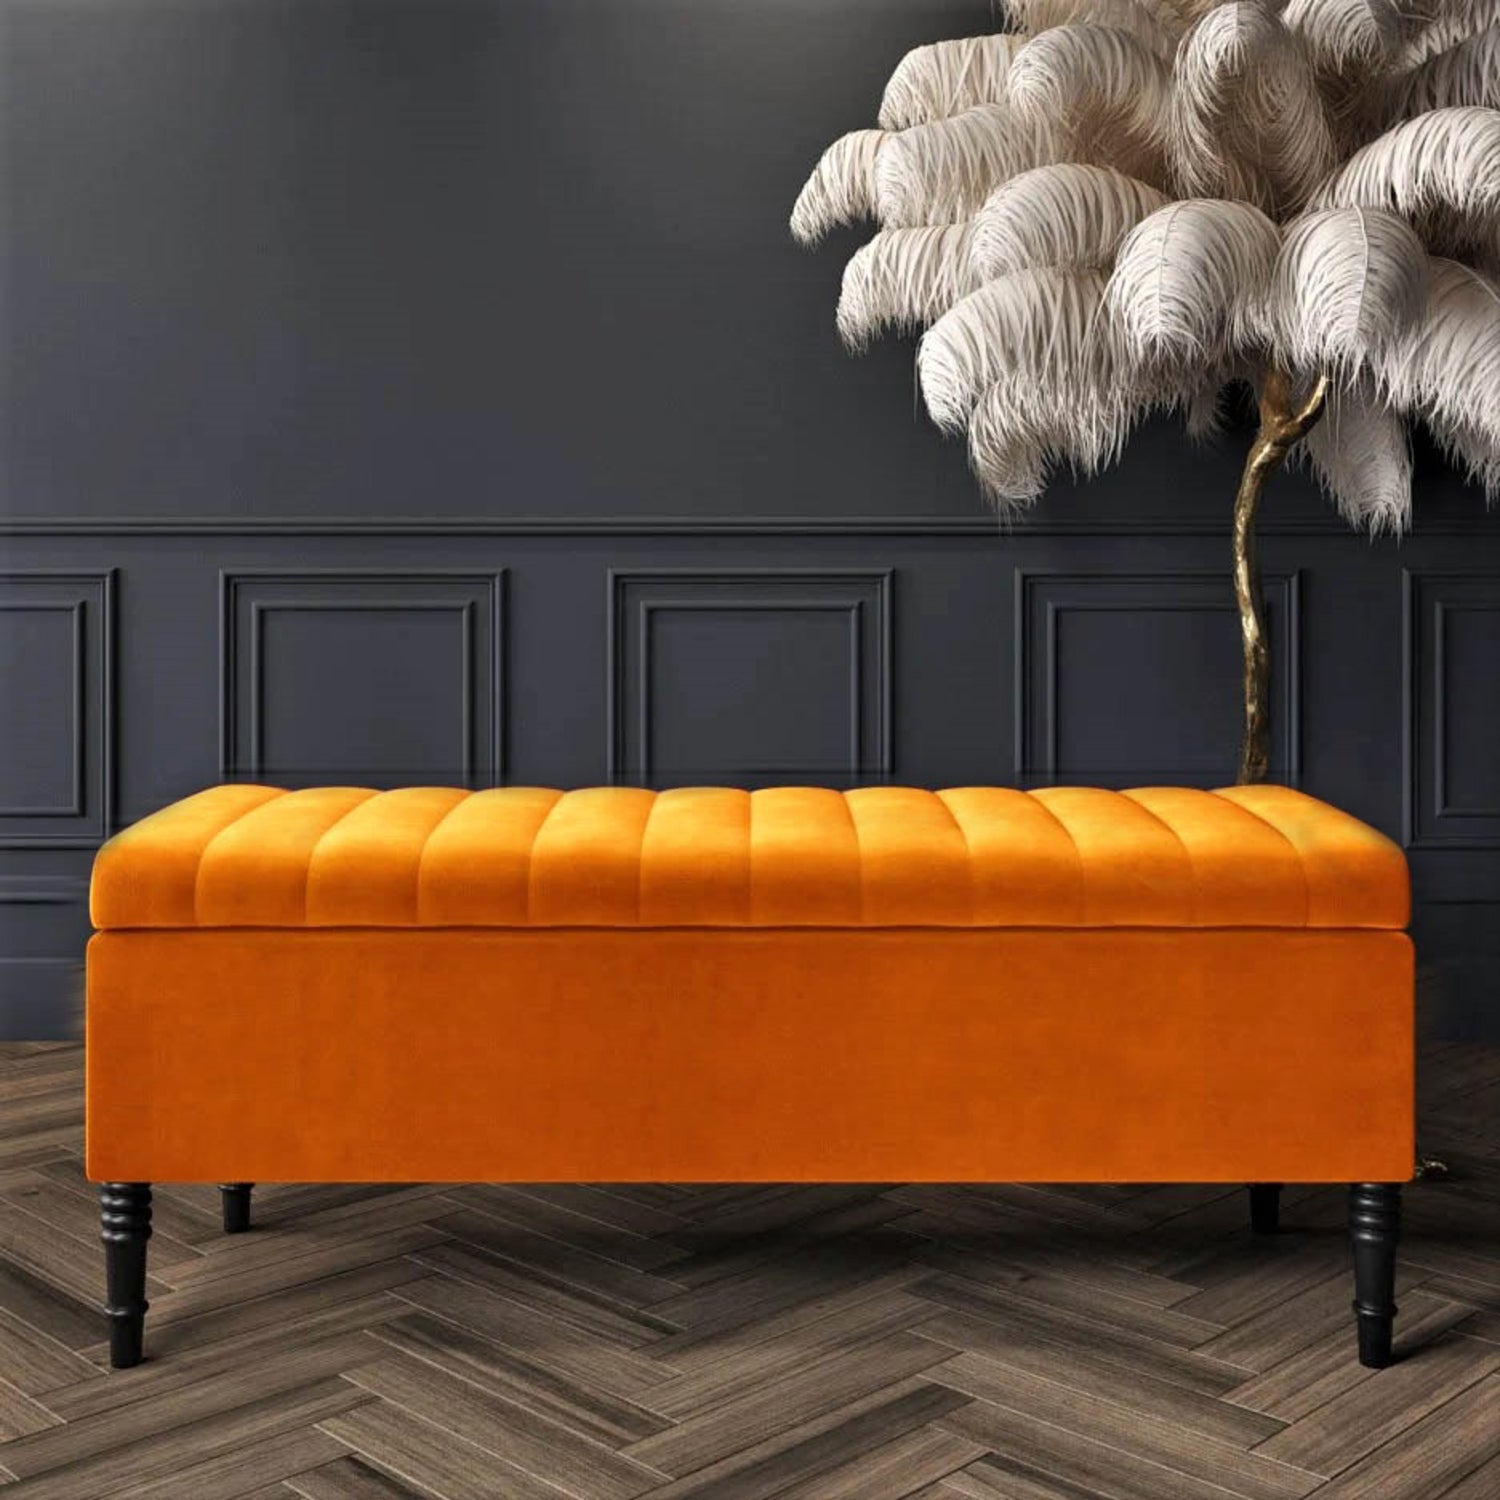 Luxurious Burnt Orange Velvet Bench with Storage